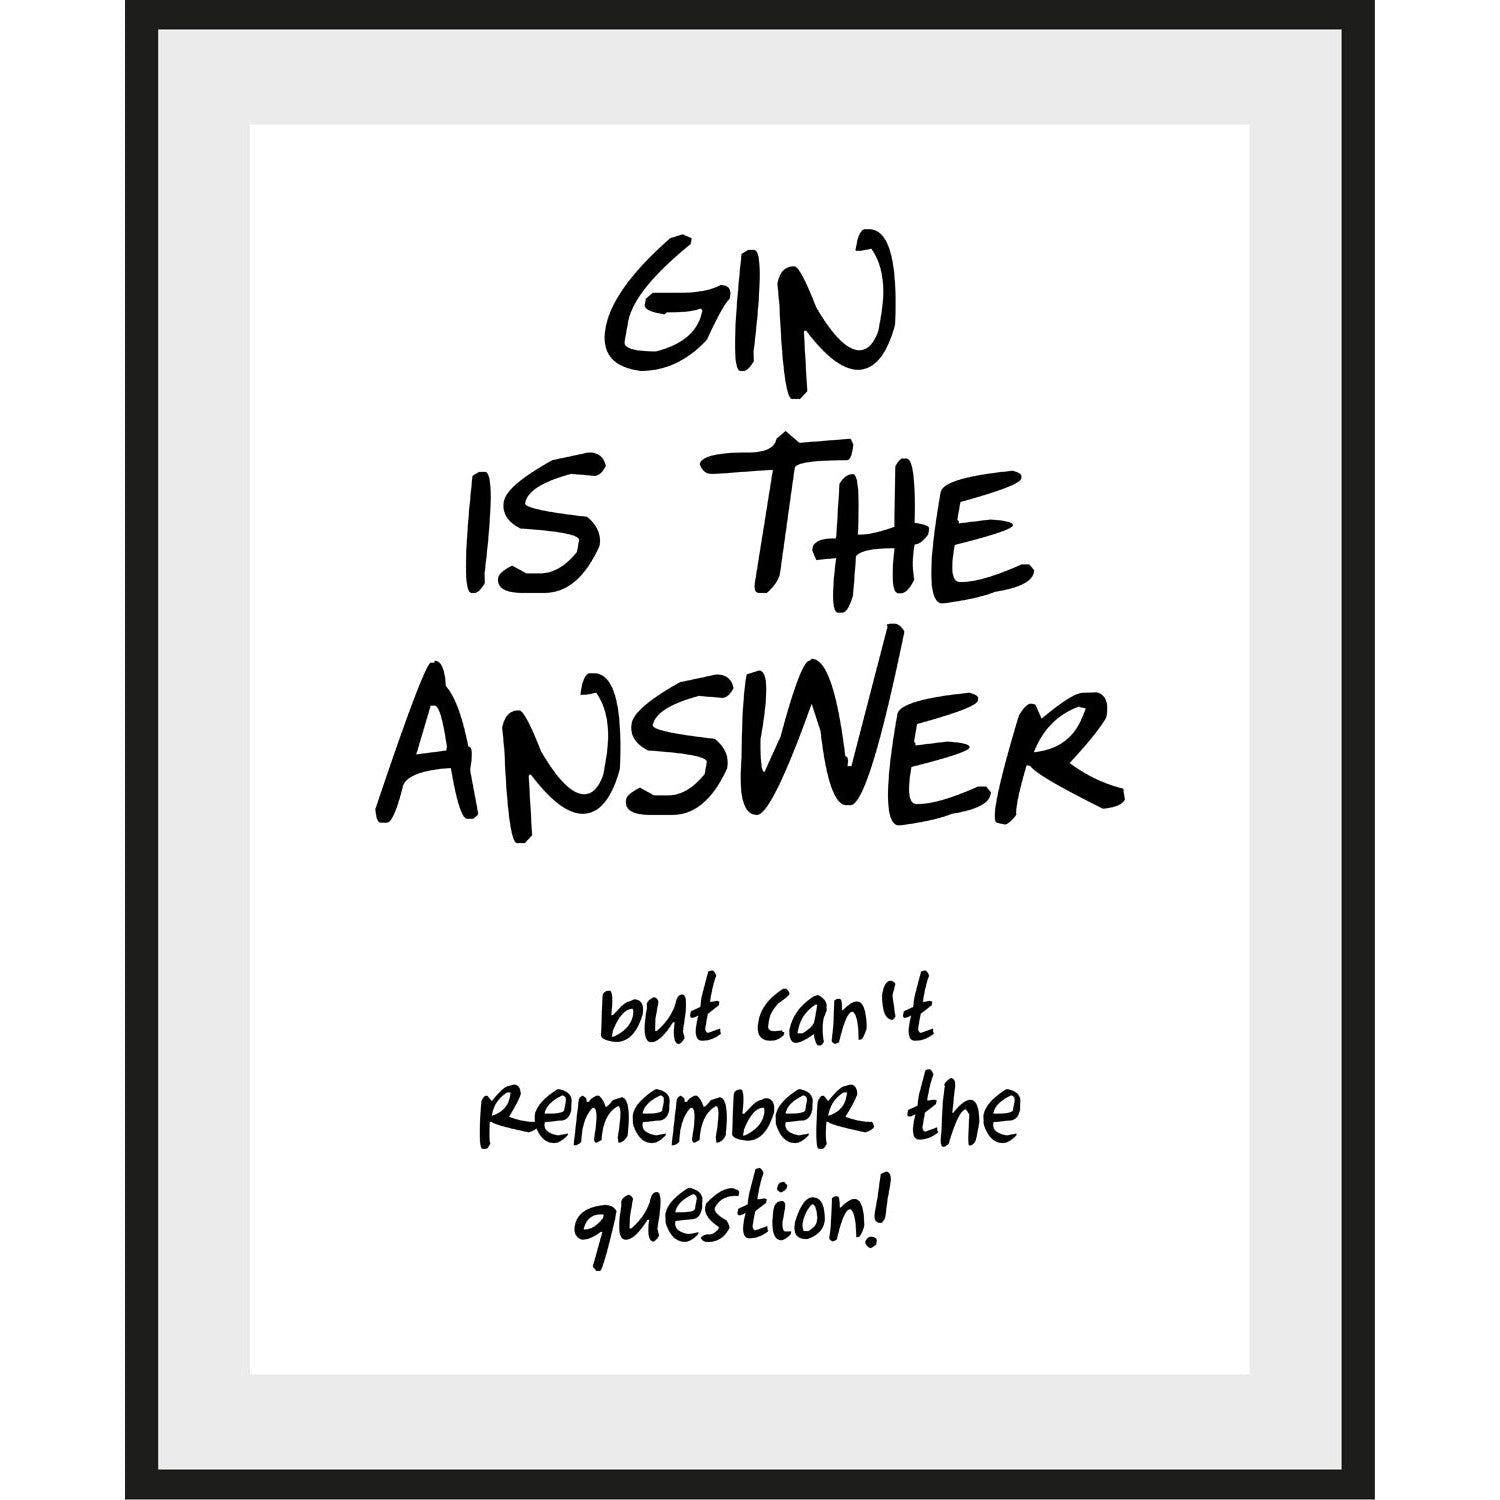 Rahmenbild - Gin is the answer